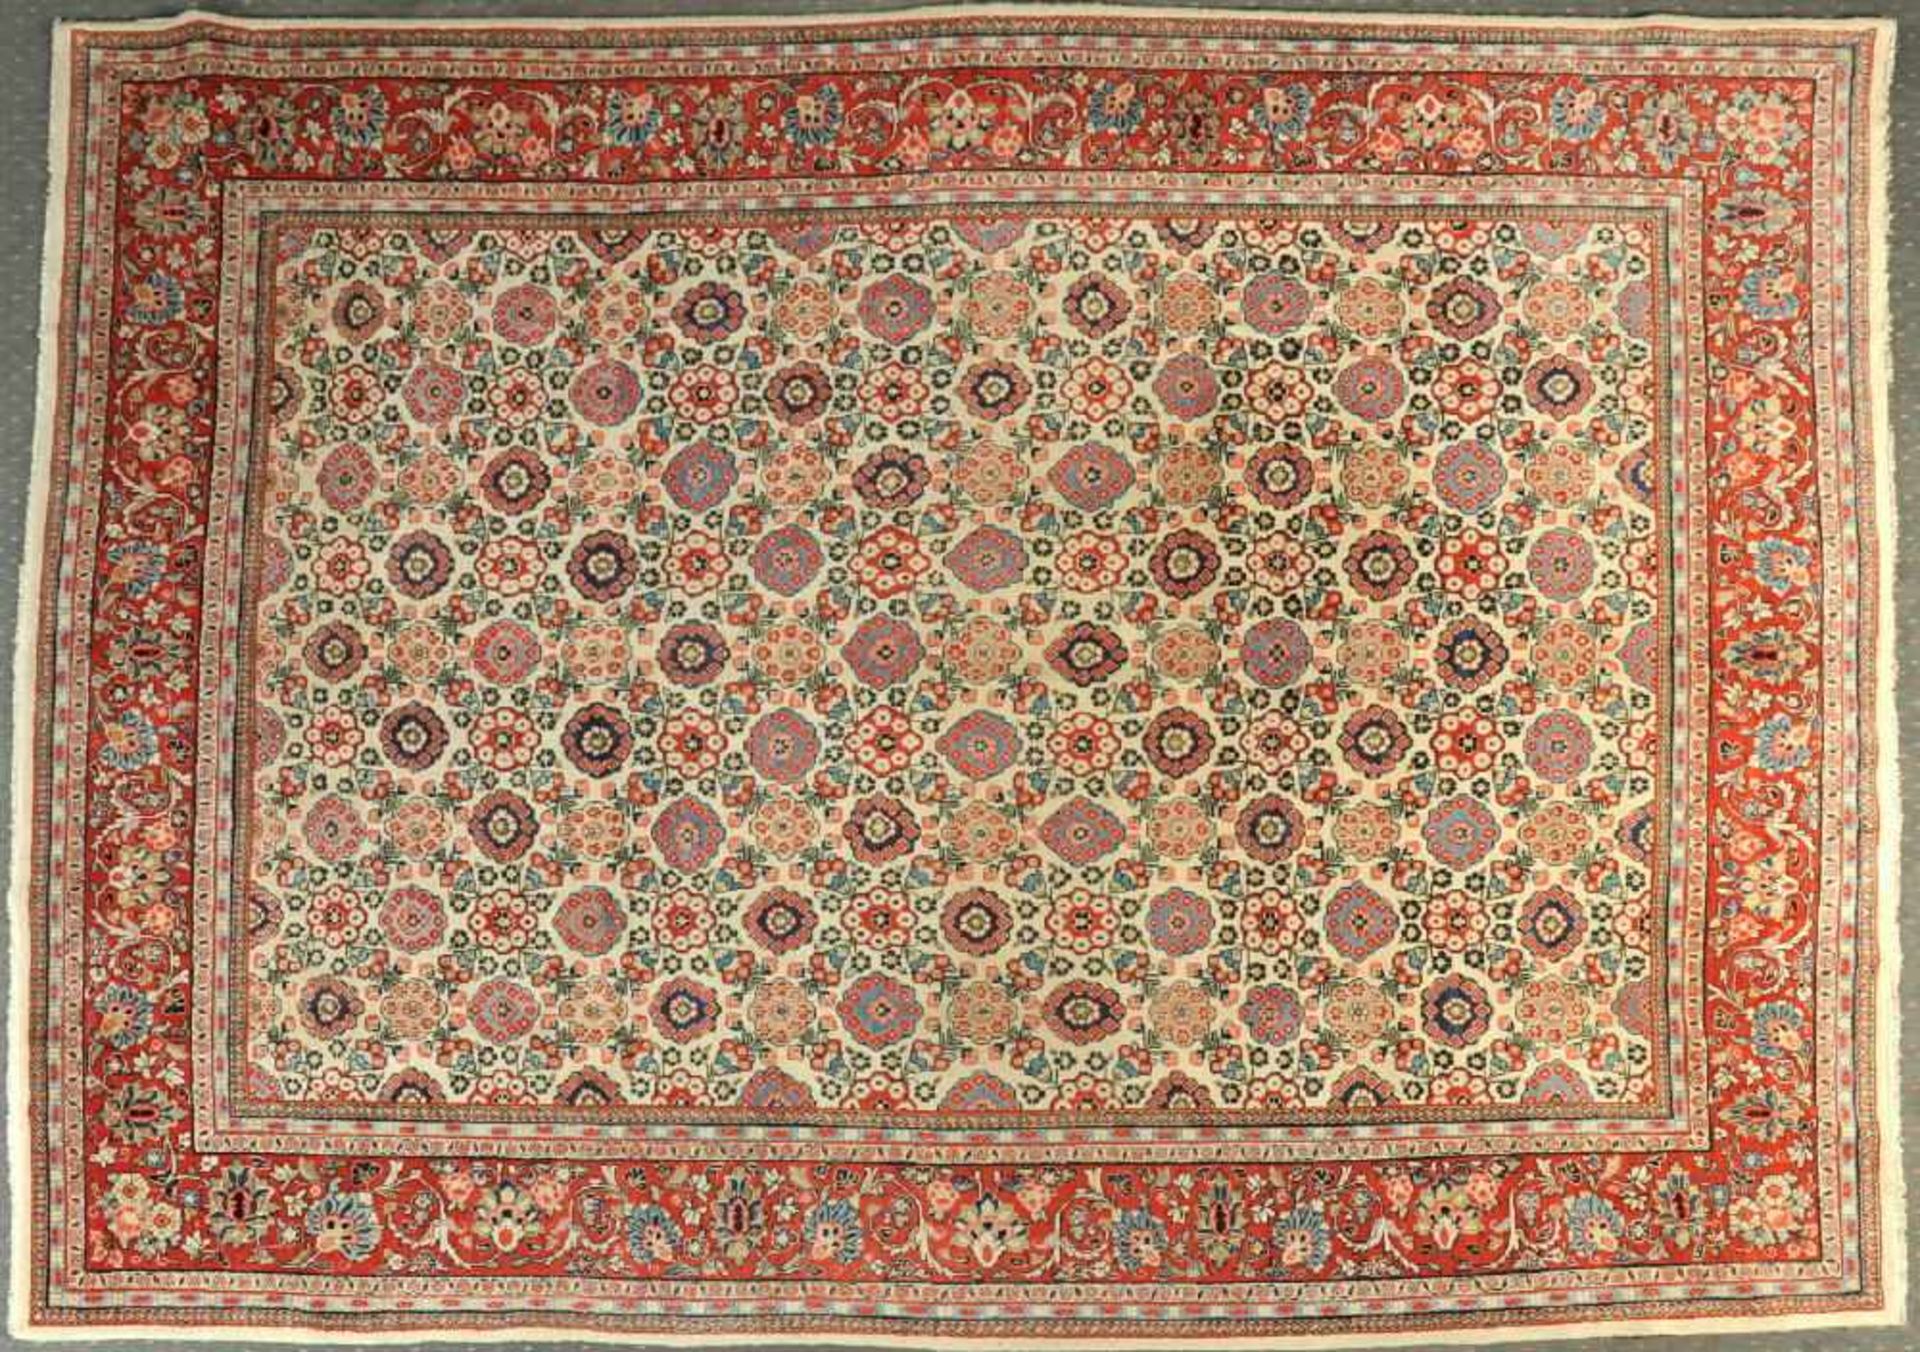 Kork-Sarough, Persien, 275 x 368 cmälter, Korkwolle, feine Knüpfung, beigegrundig, durchgemustert